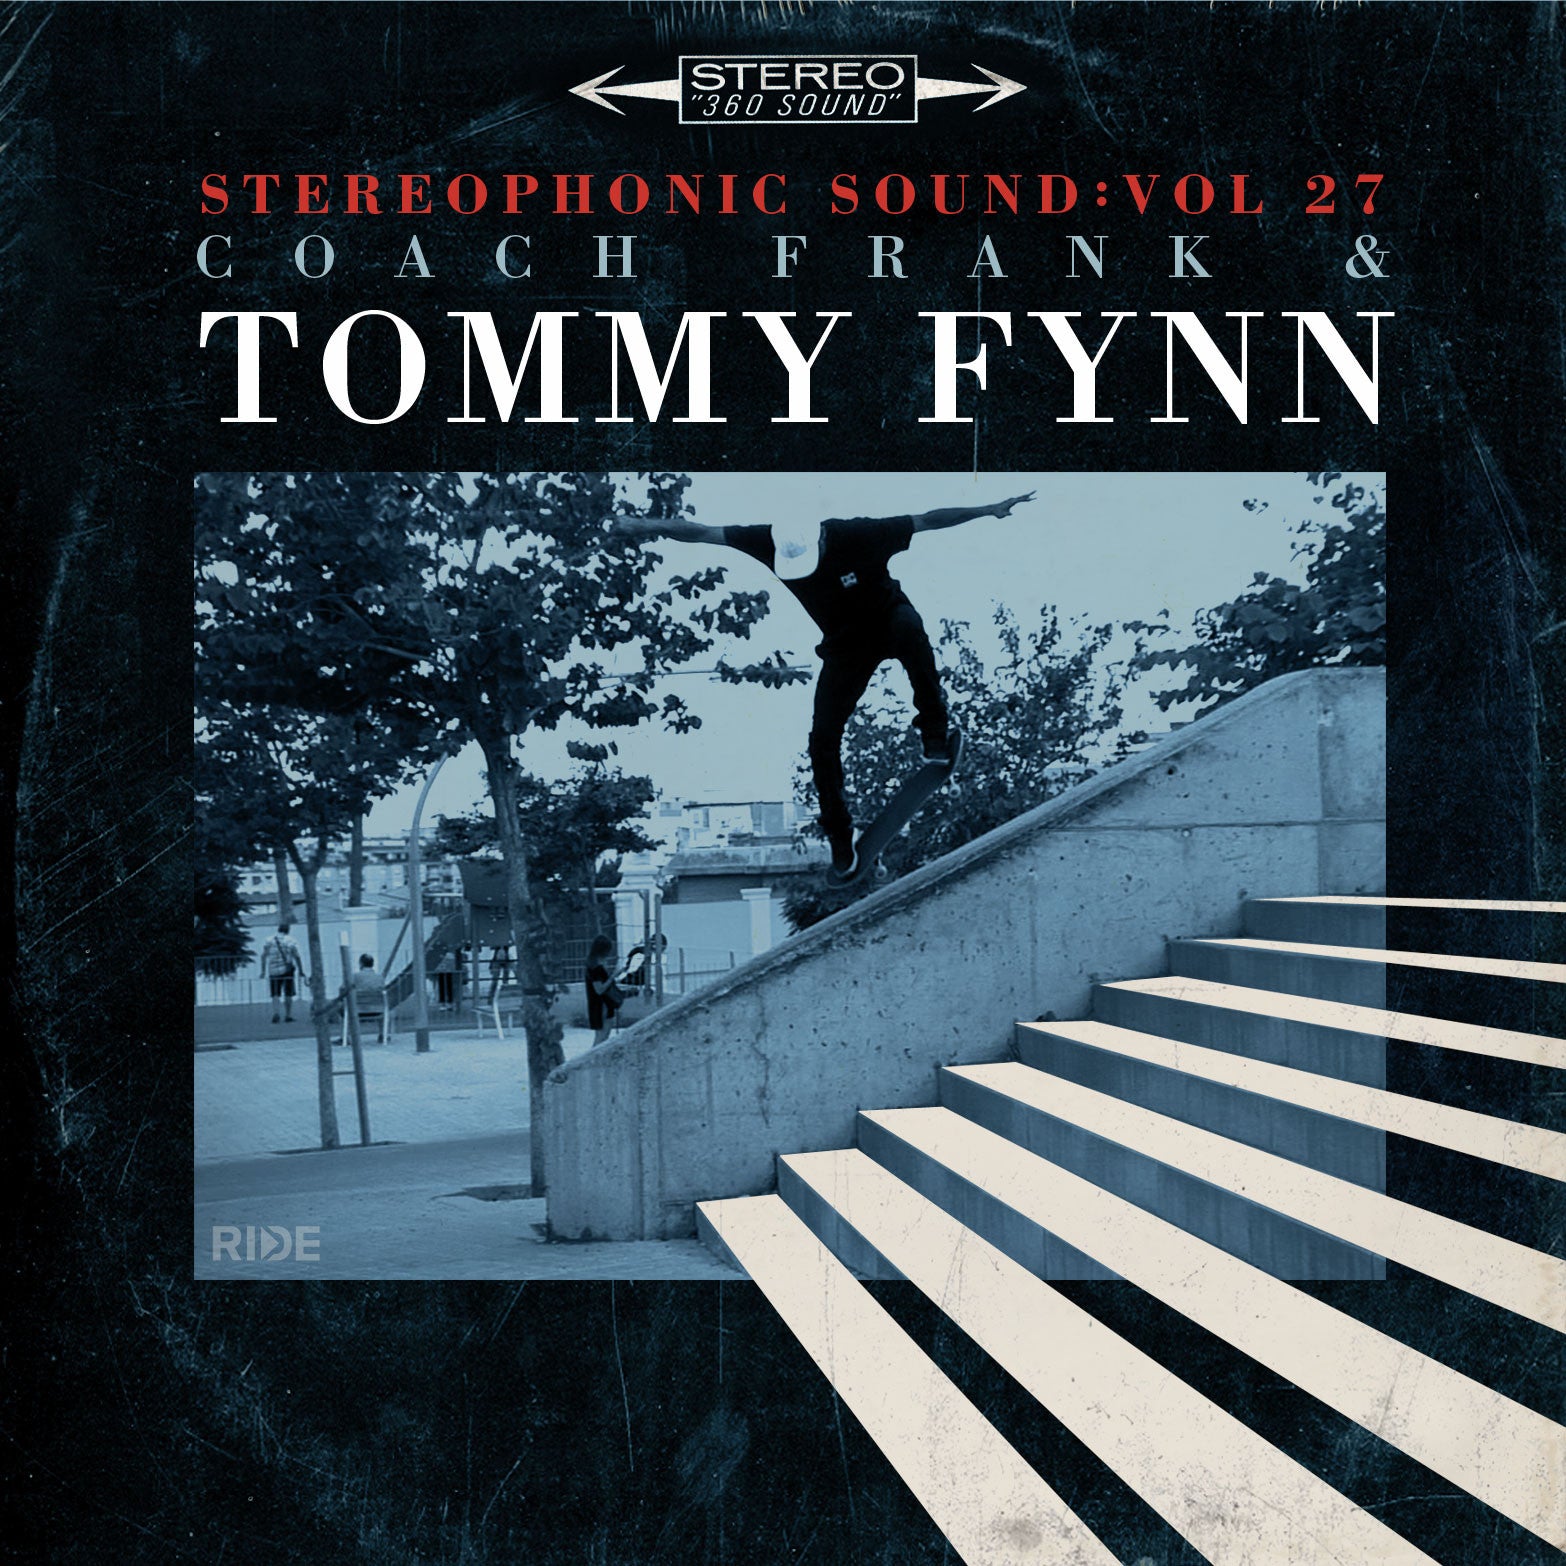 Stereophonic Sound Volume 27: Coach Frank & Tommy Fynn